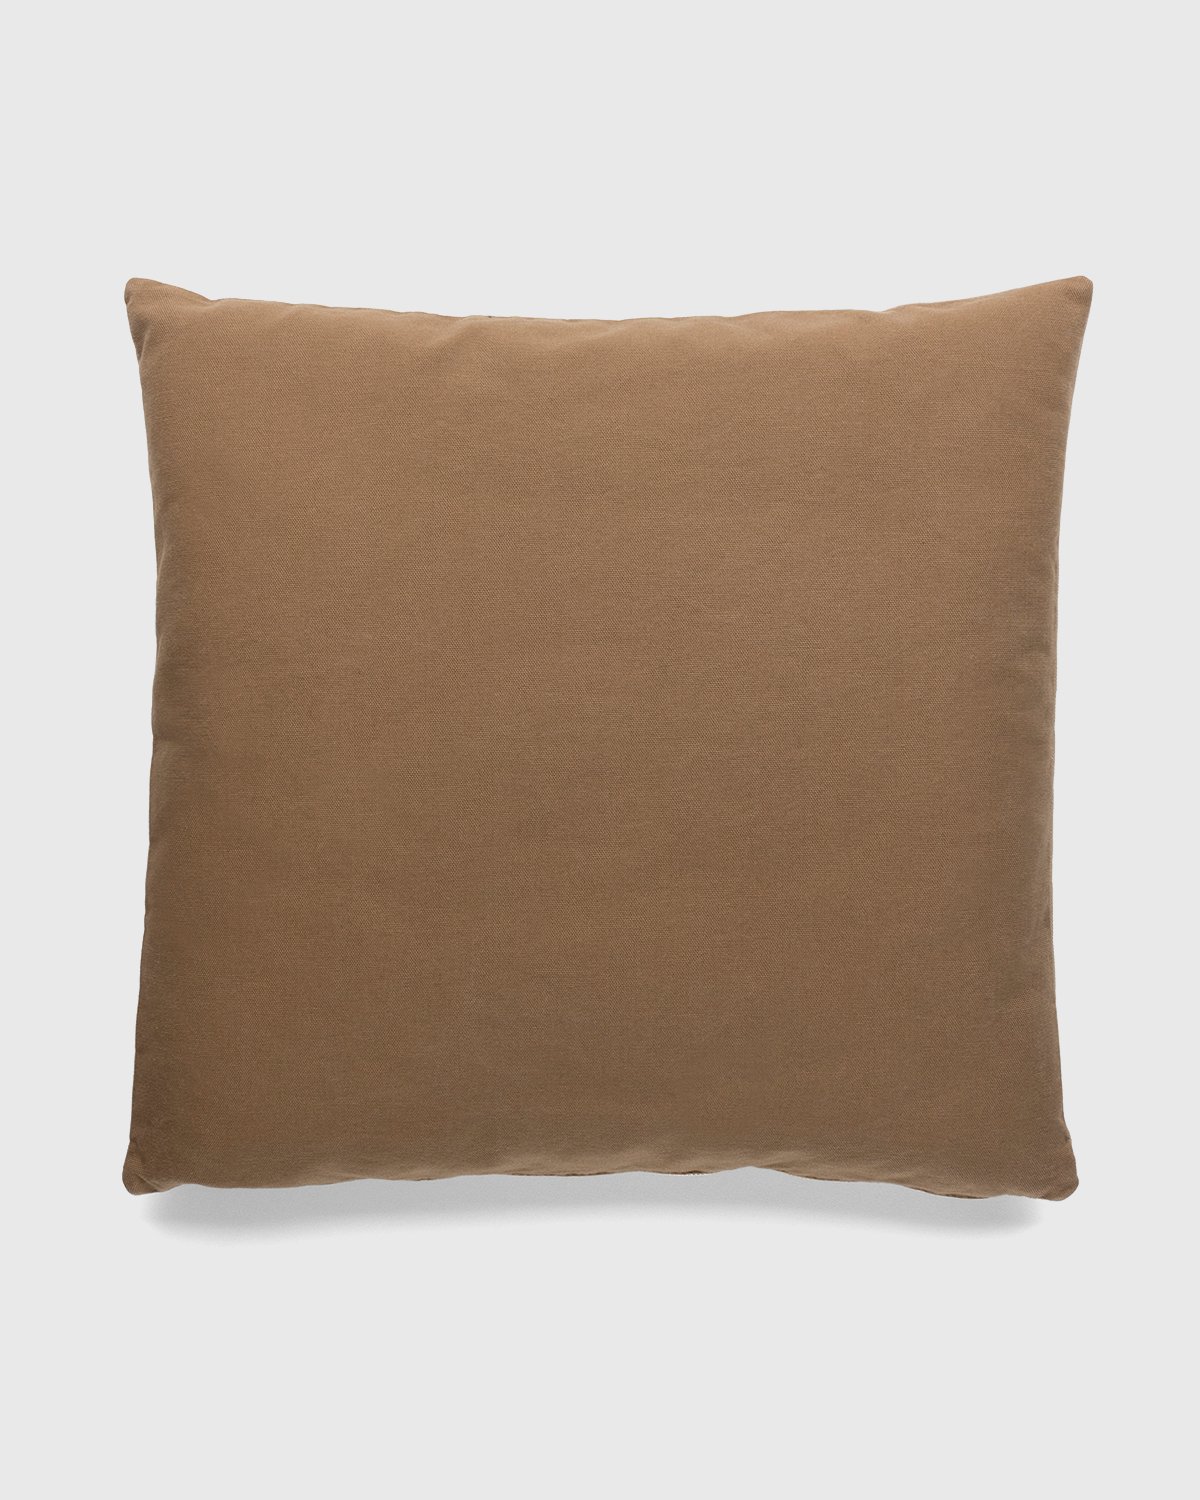 Carhartt WIP - Tonare Cushion Dusty Hamilton Brown - Lifestyle - Brown - Image 2